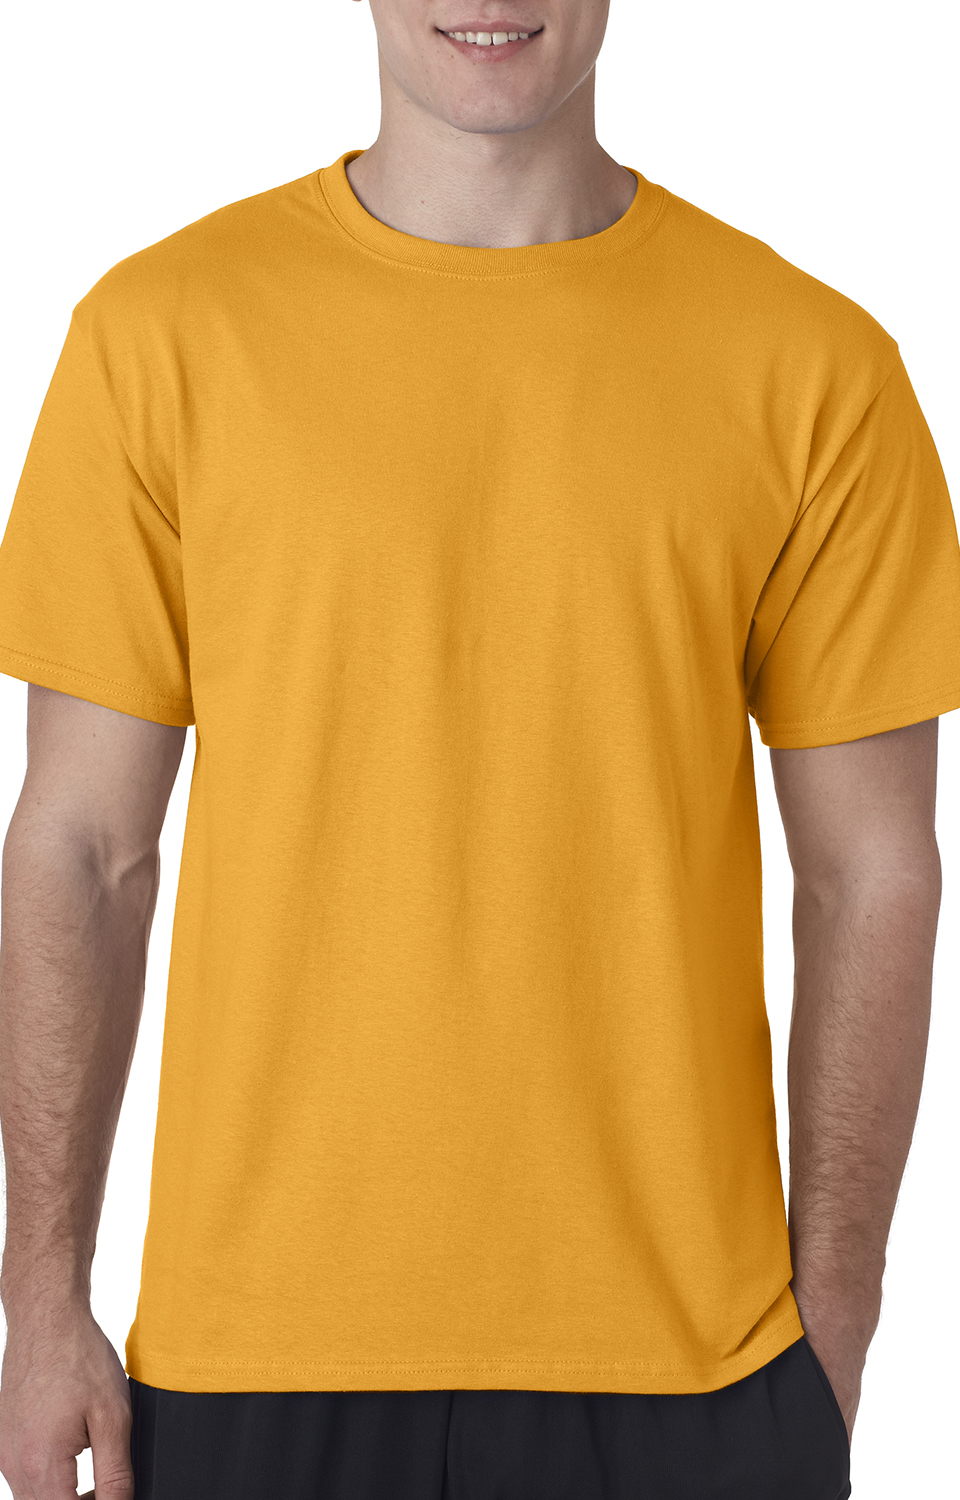 champion yellow tshirt